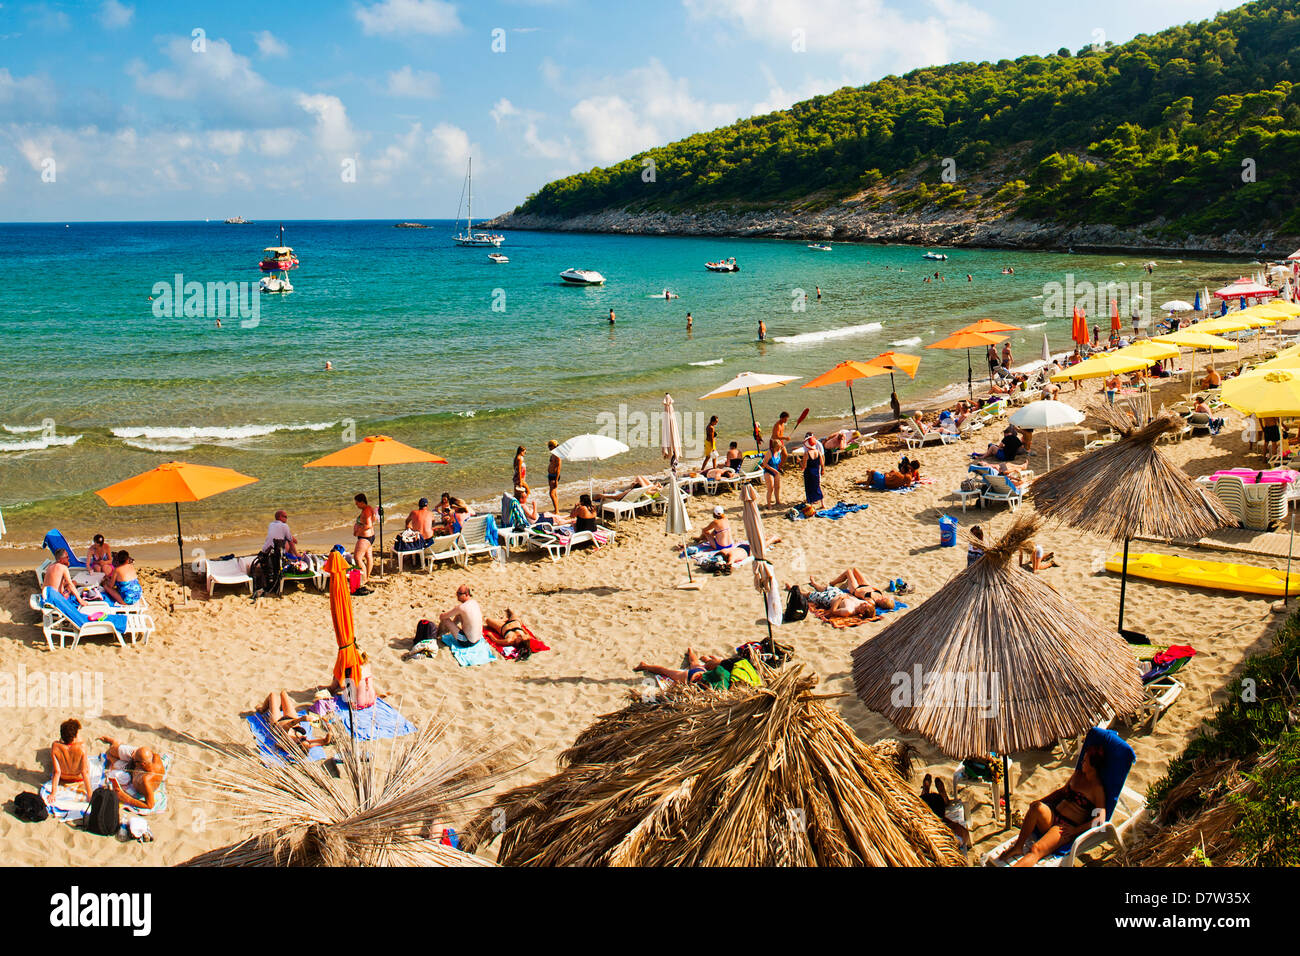 Sunj Beach, einem beliebten Sandstrand auf Lopud Insel, Elafiti Inseln (Elaphiten), Dalmatien, Adria, Kroatien Stockfoto